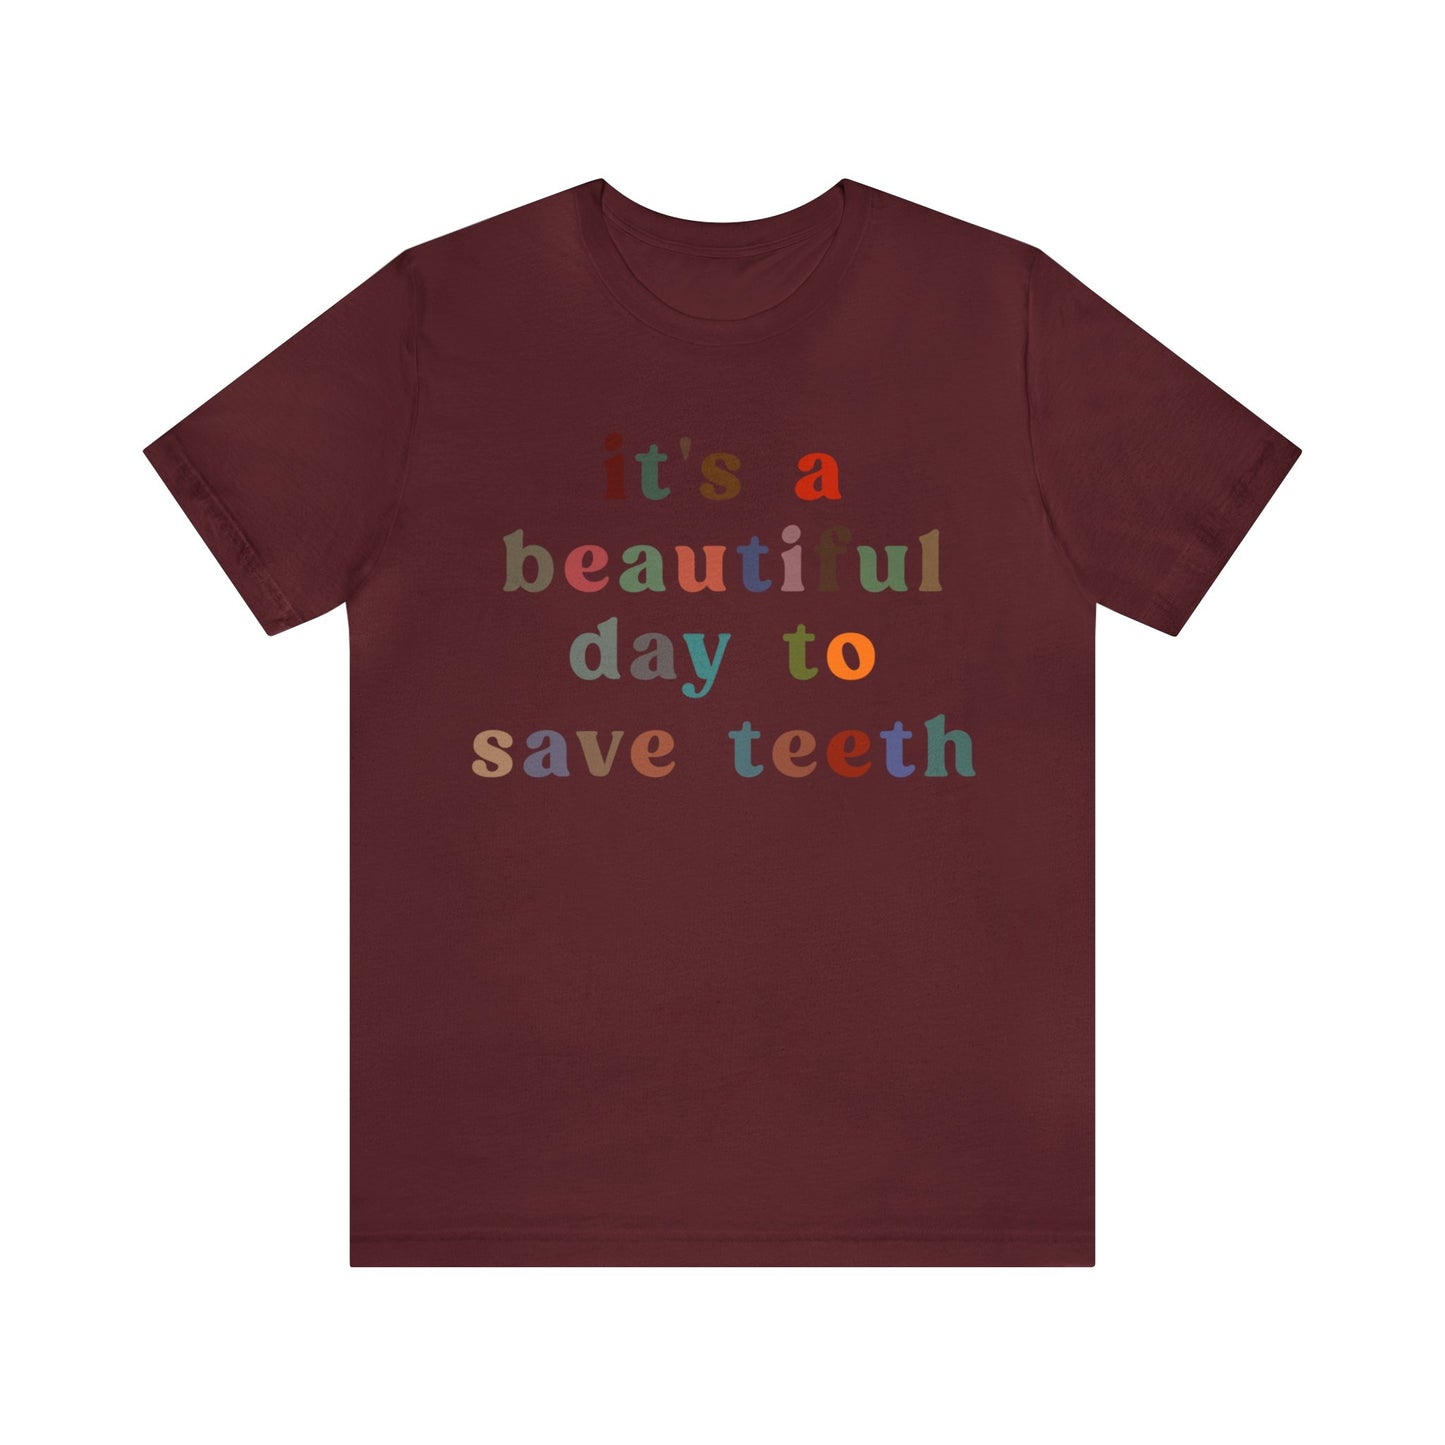 It's A Beautiful Day To Save Teeth Shirt, Dental Student Shirt, Orthodontist Shirt, Dentistry Shirt, Doctor of Dental Surgery Shirt, T1258